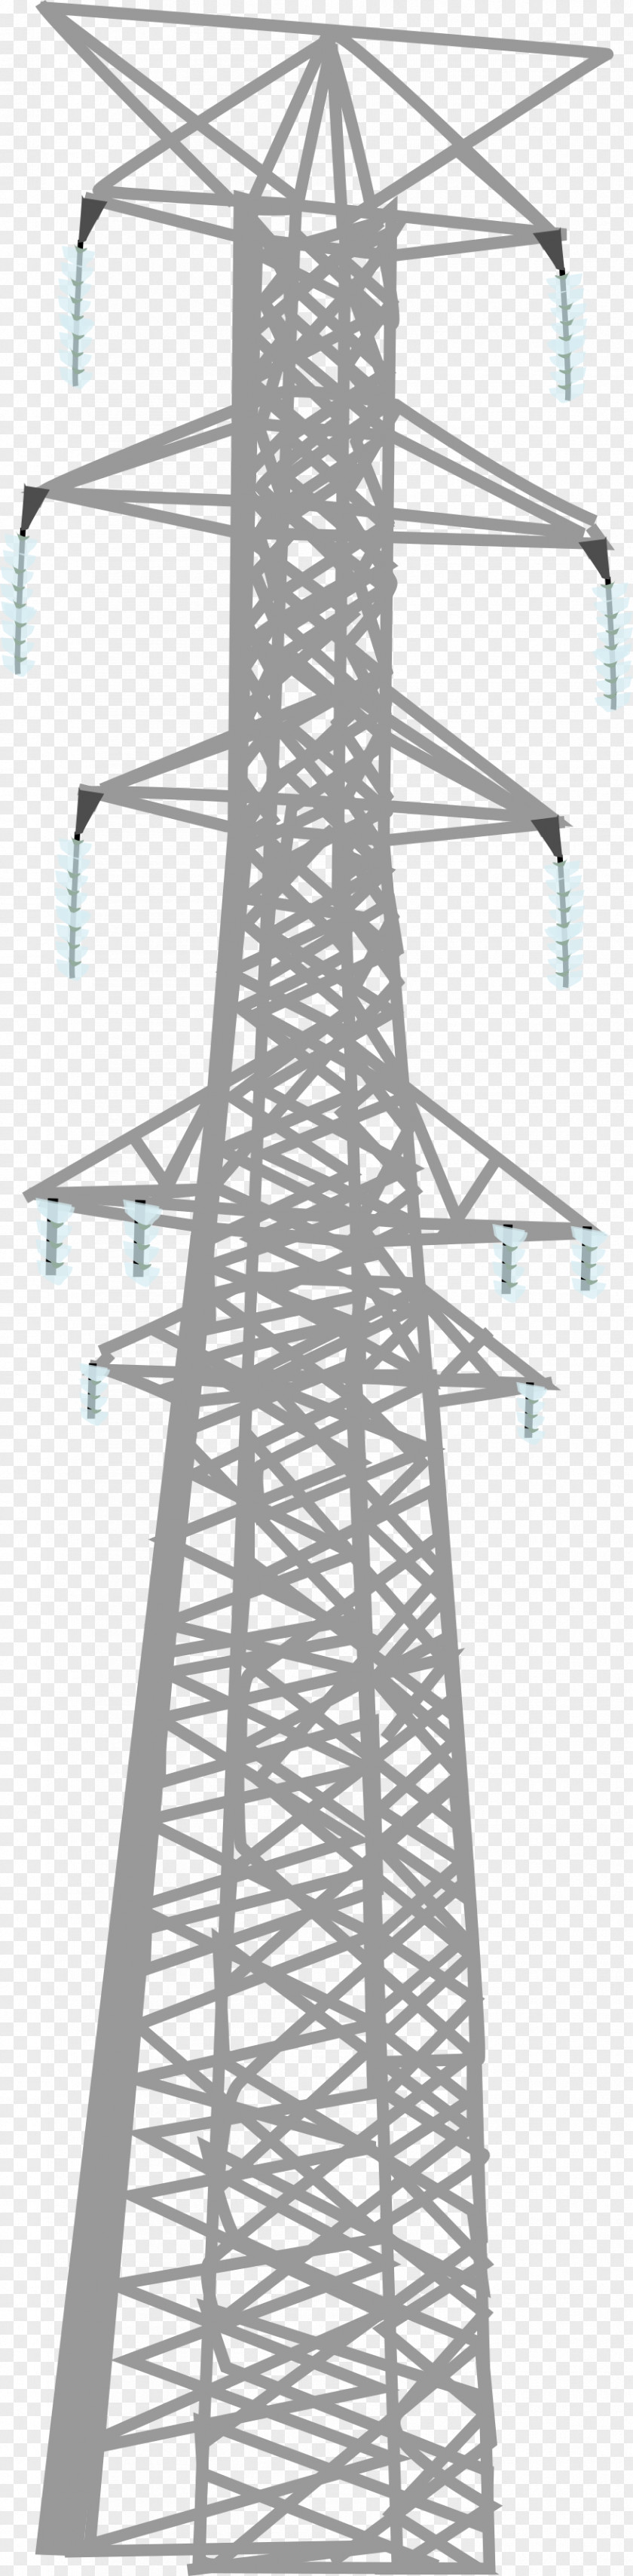 Line Transmission Tower Public Utility Symmetry Electricity PNG